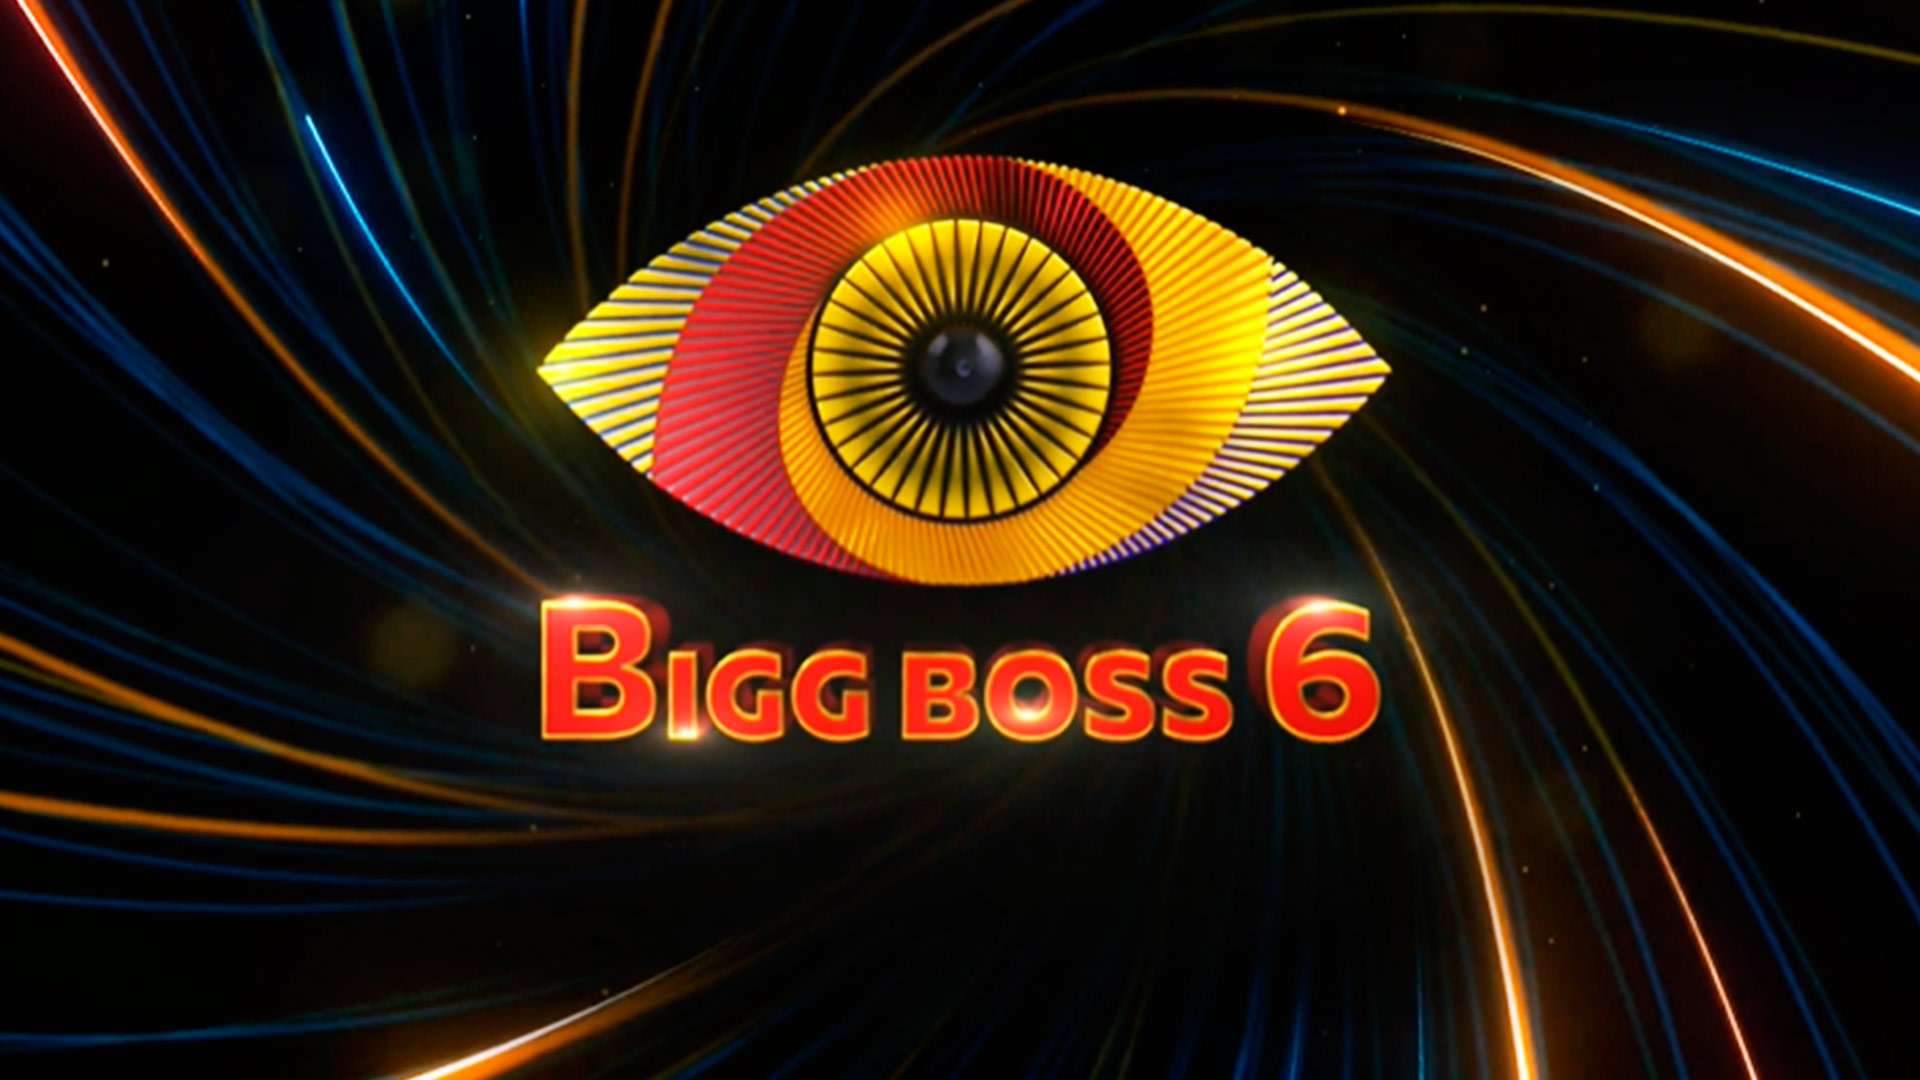 Nagarjuna's explanation on Narayana's comments on Bigg Boss show